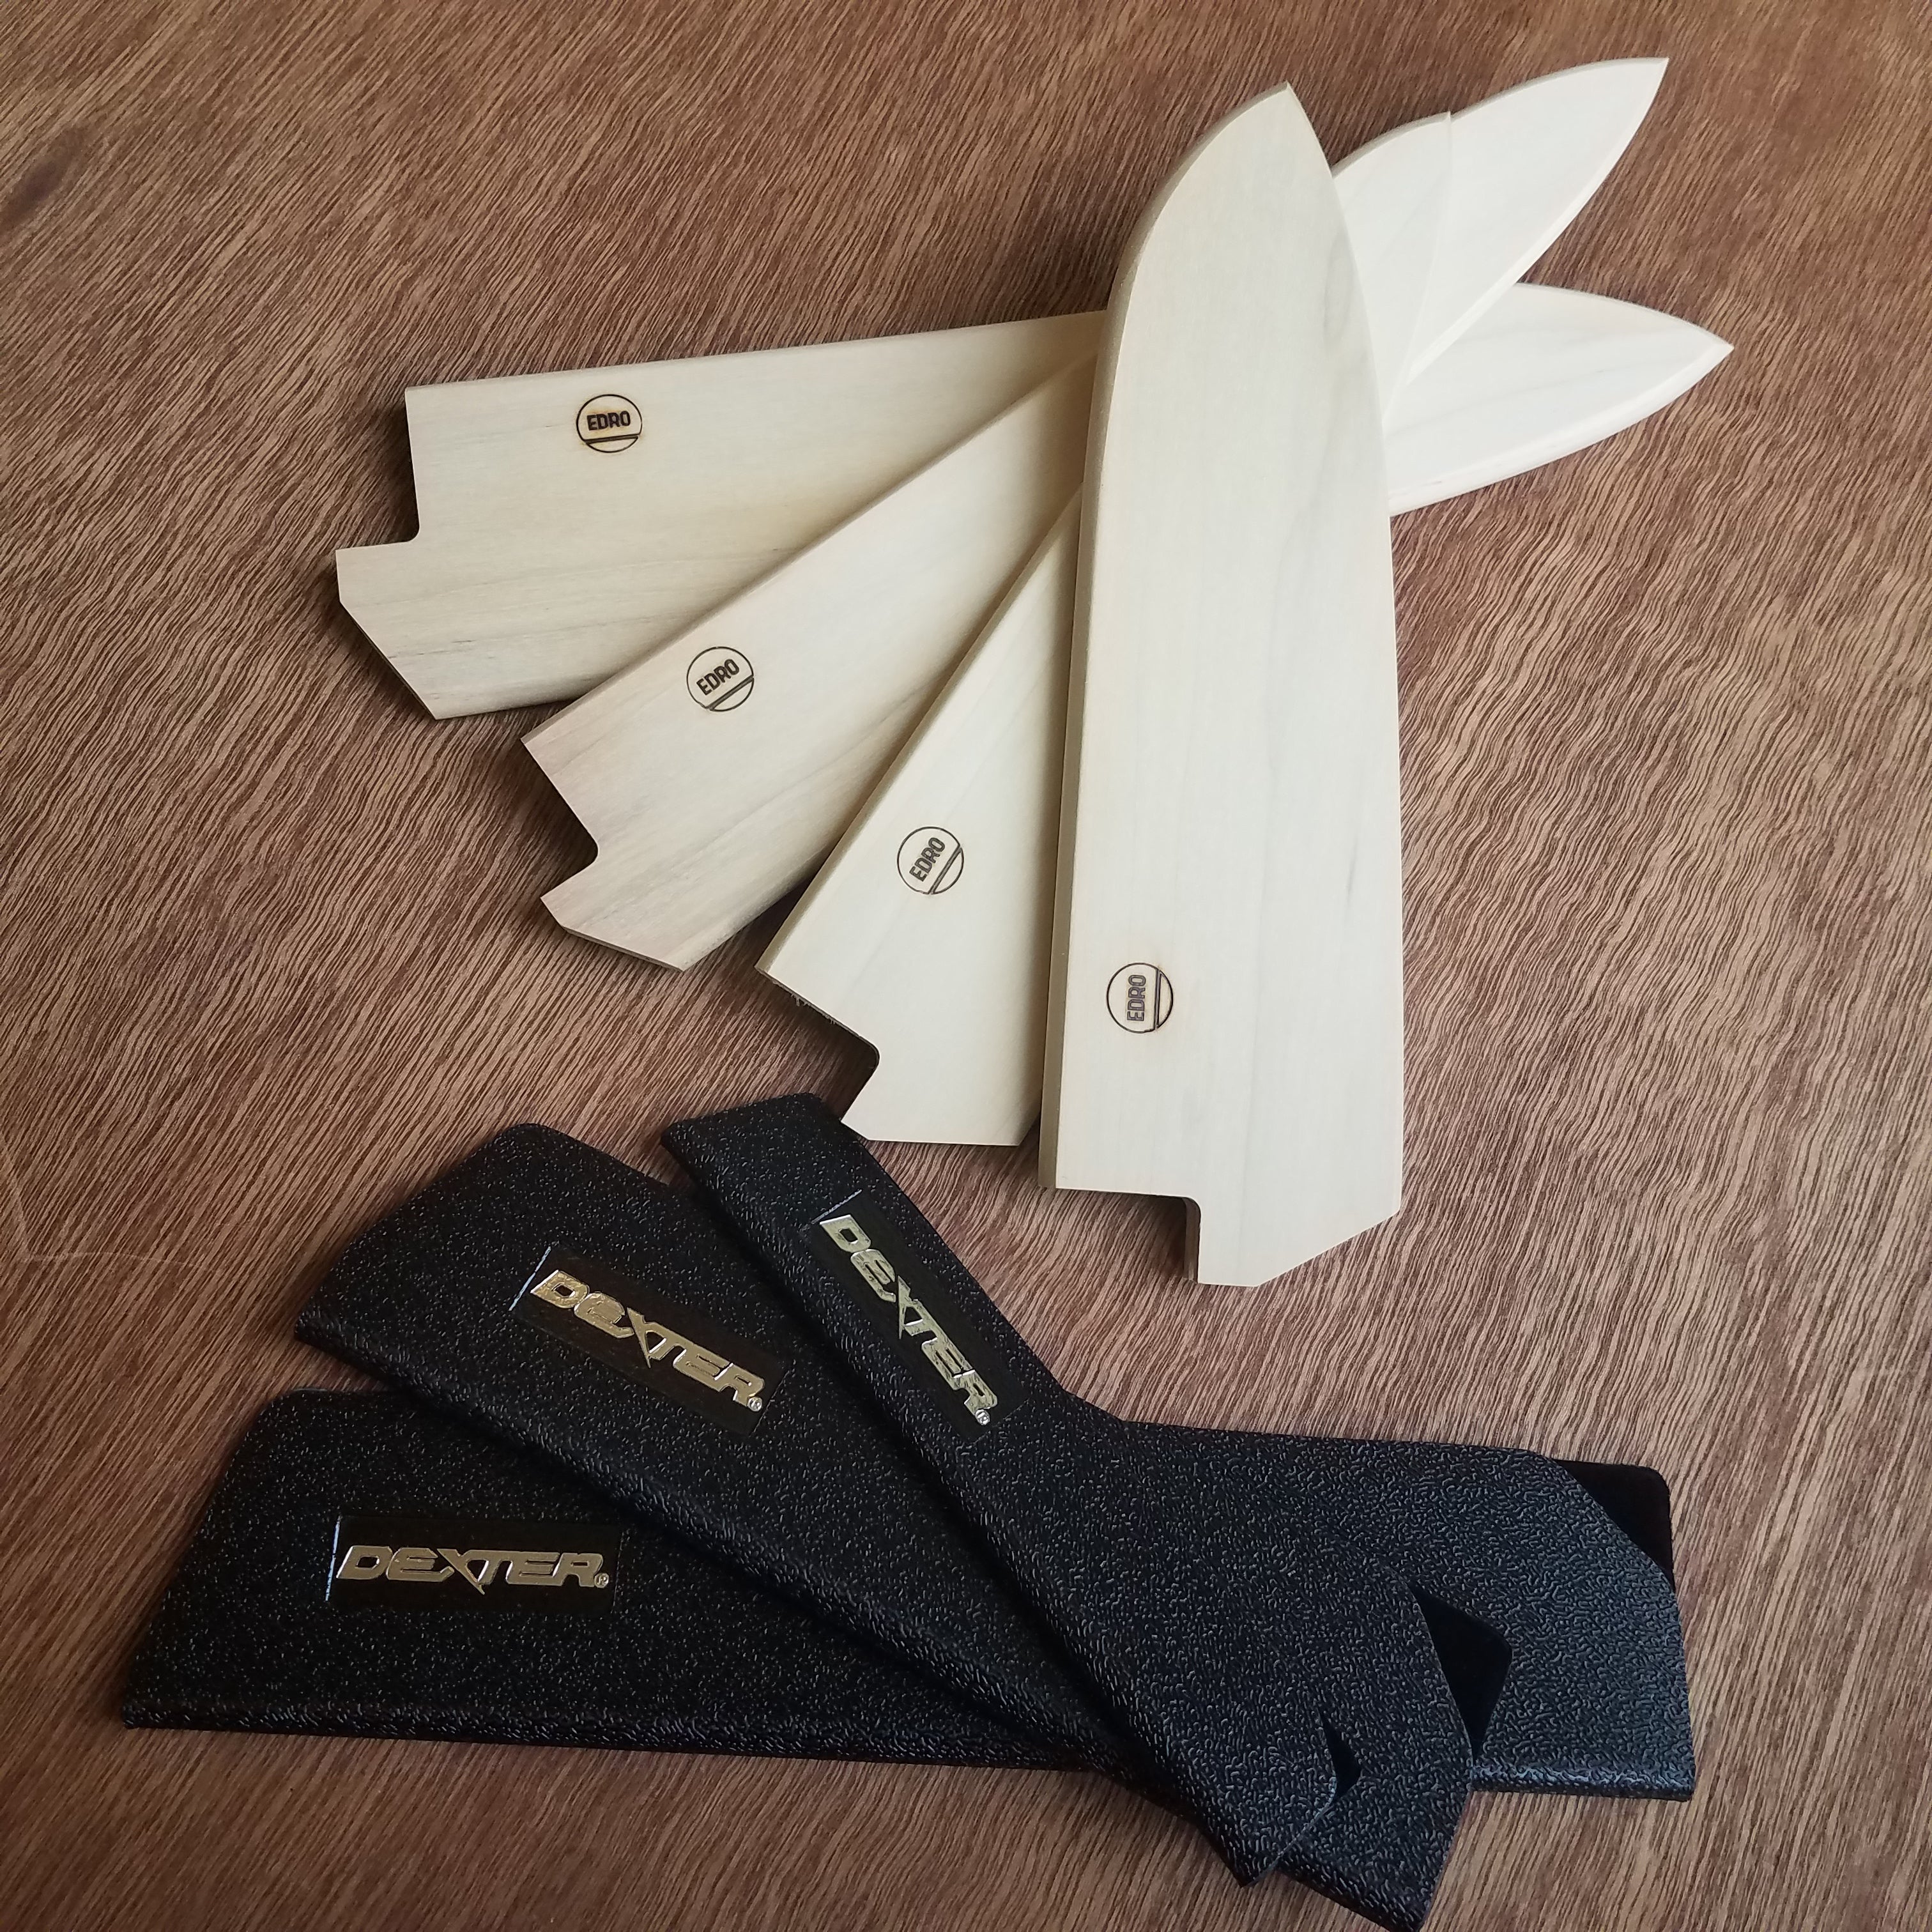 Baja Saya - Knife Storage for your Blade